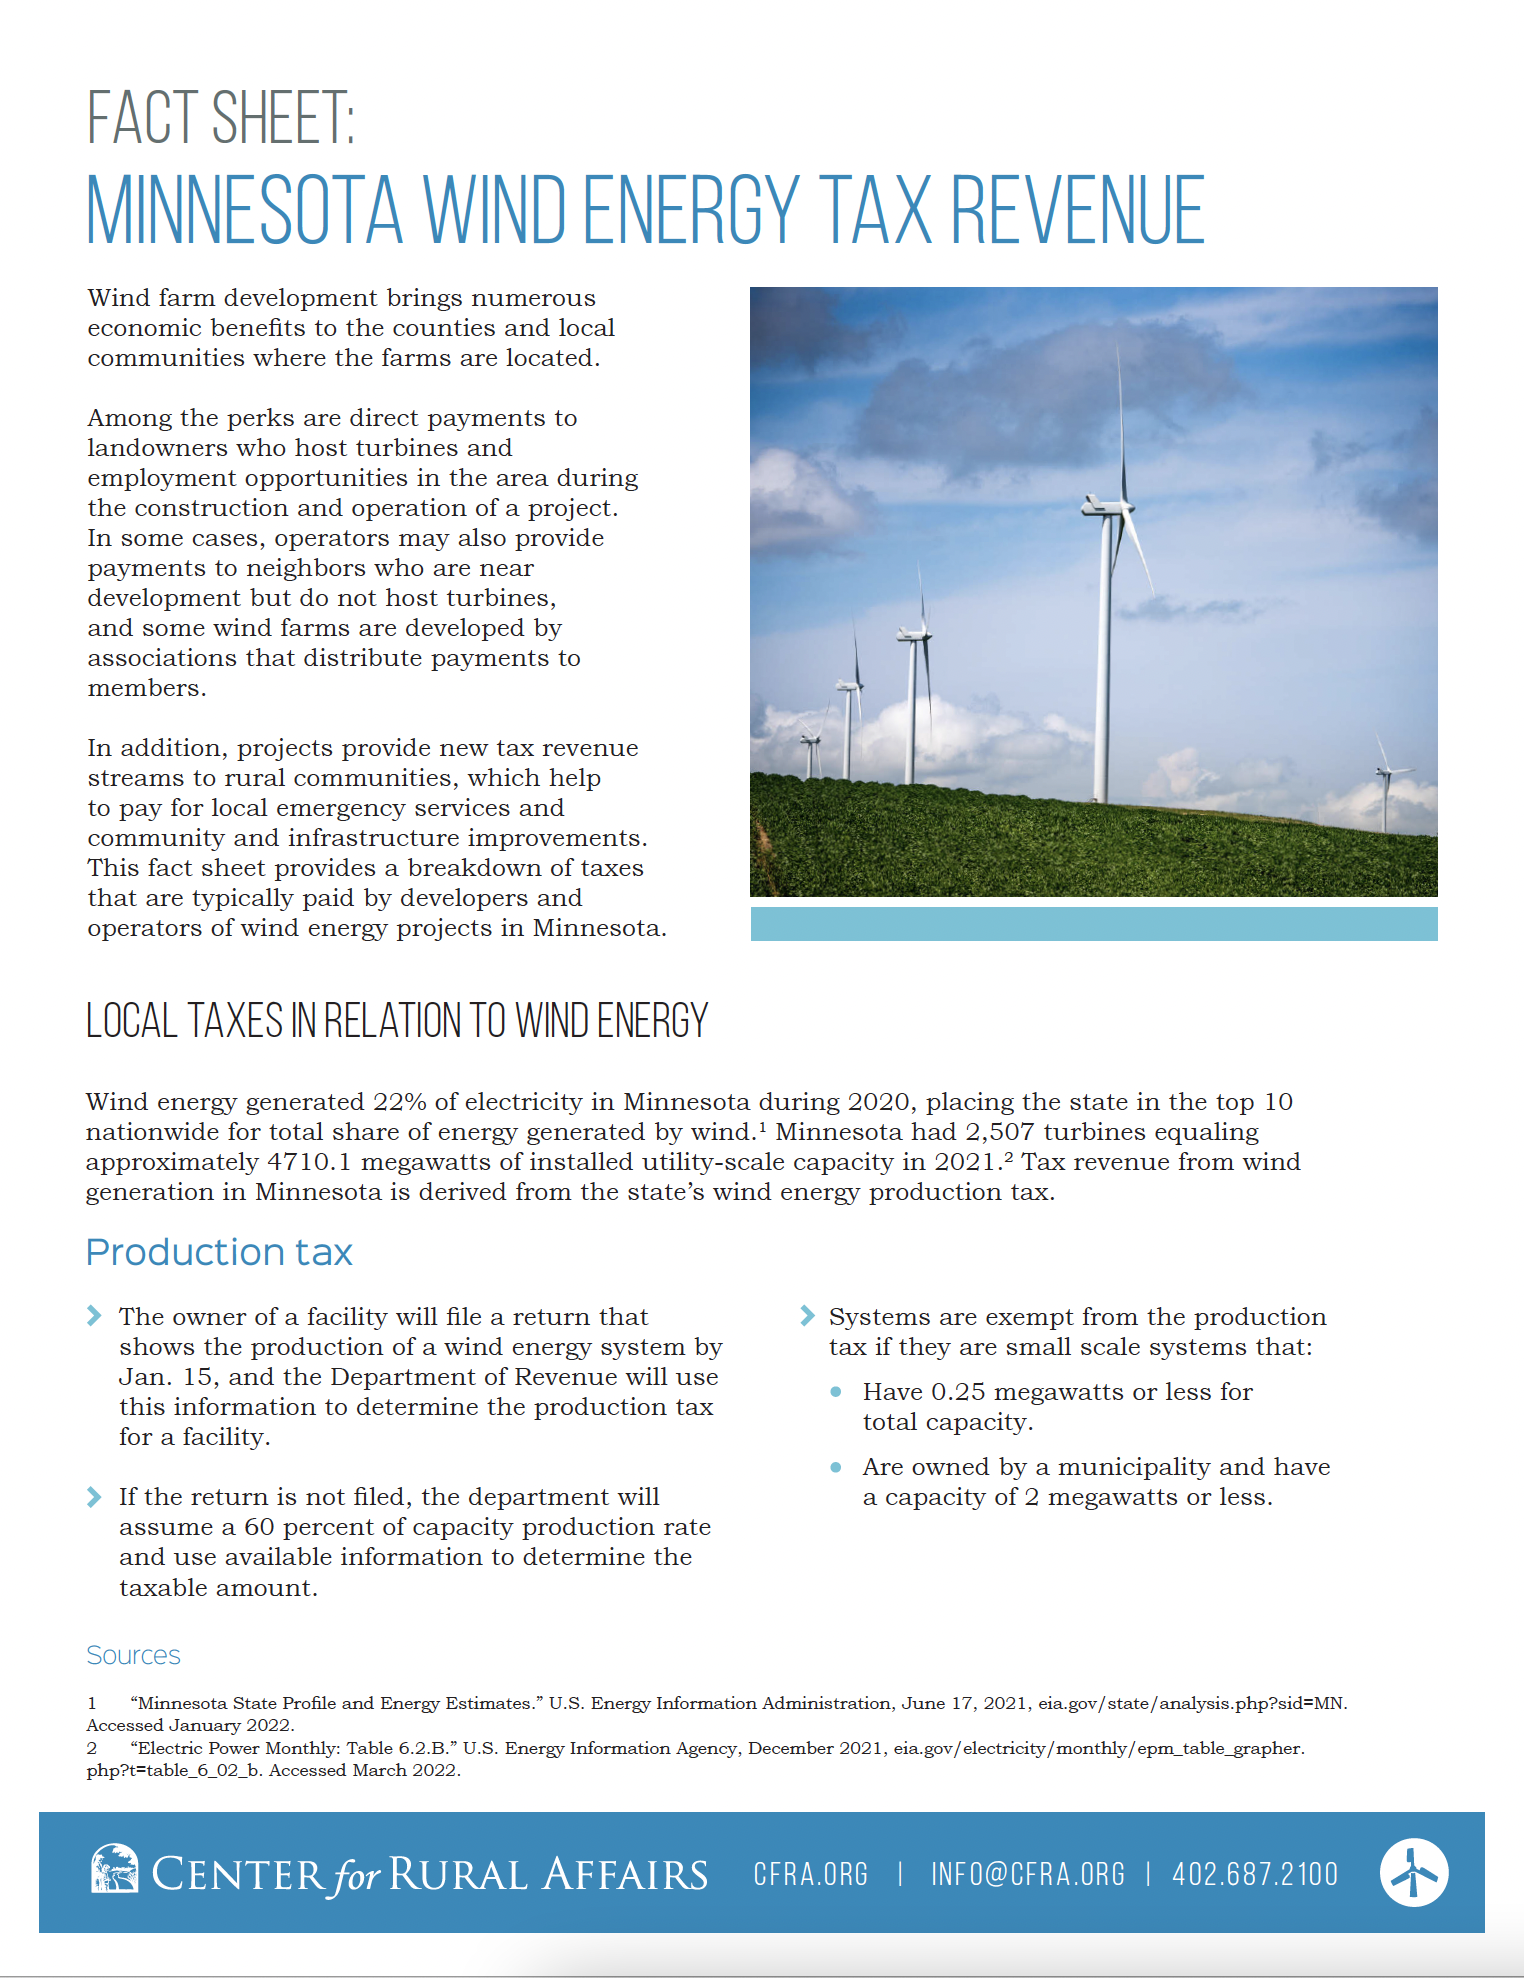 fact-sheet-minnesota-wind-energy-tax-revenue-center-for-rural